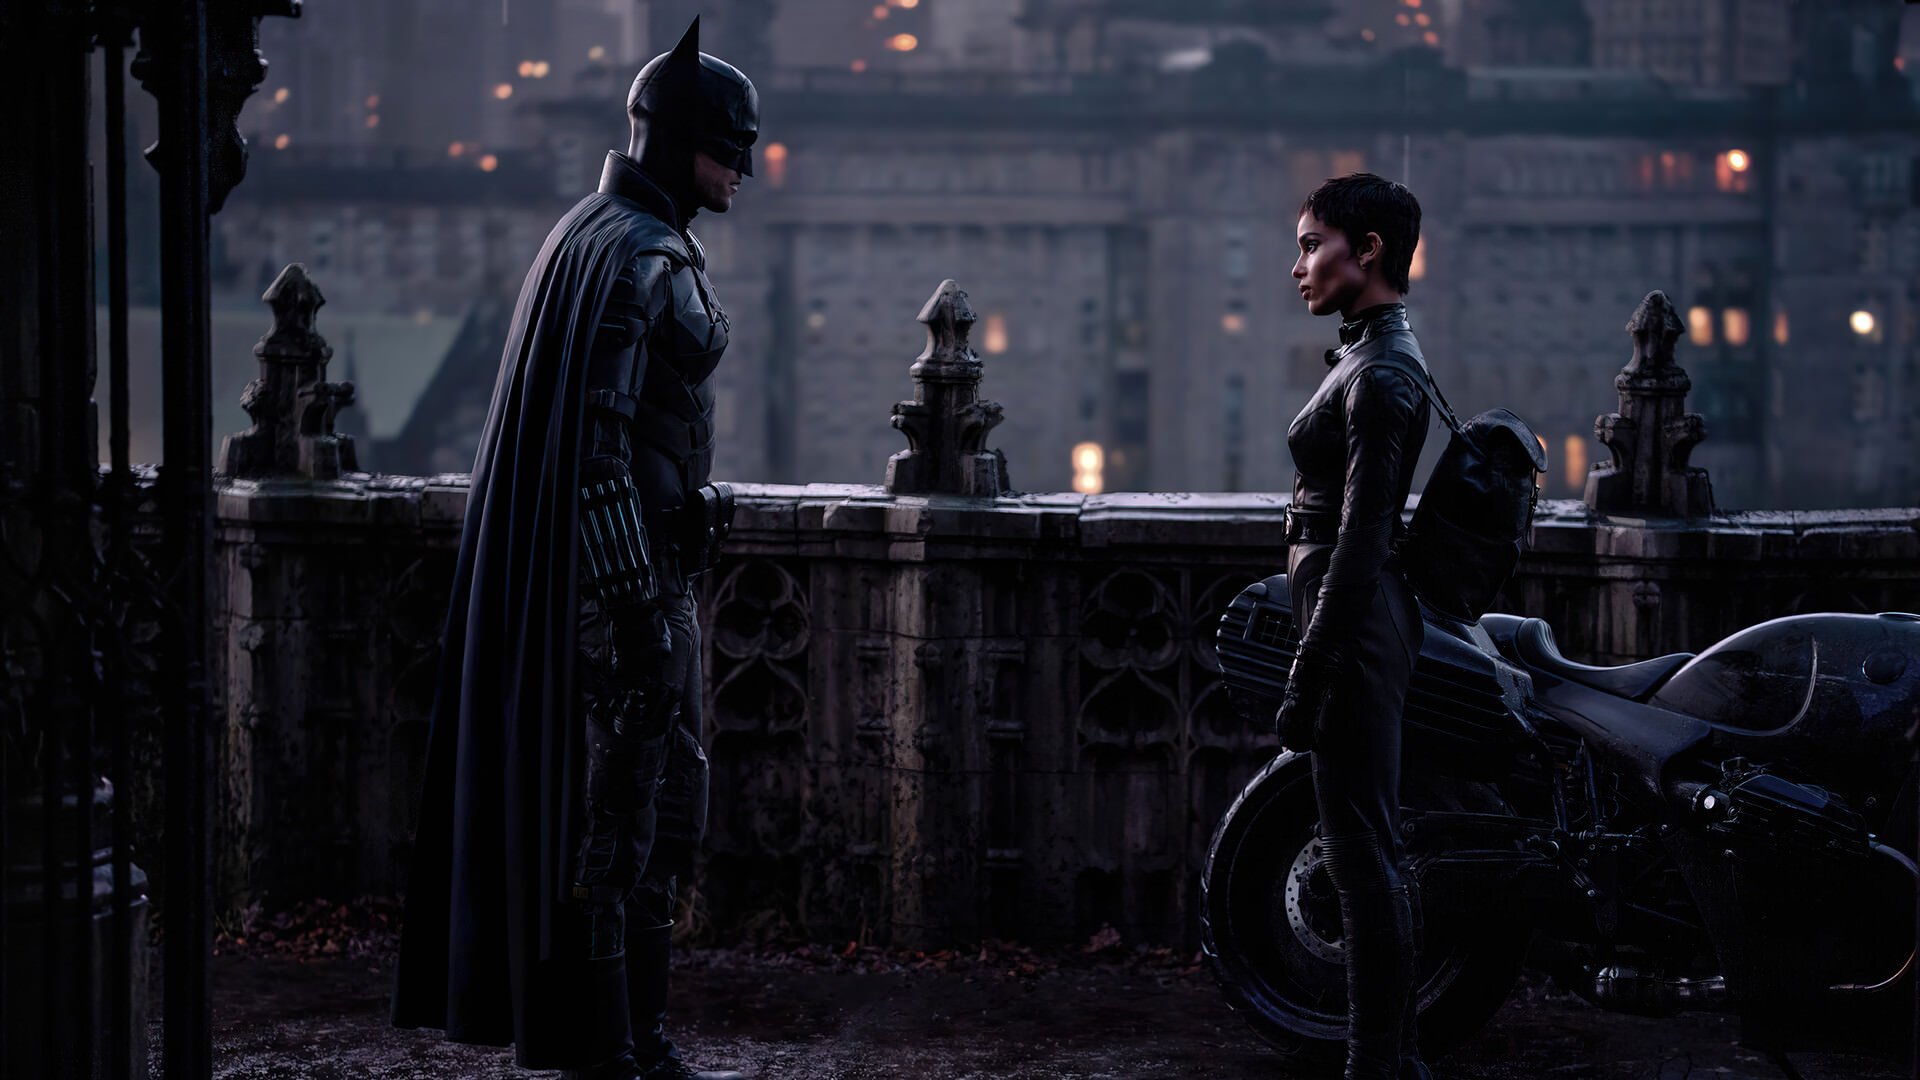 Cat and Batman meet on the balcony in Gotham in The Batman